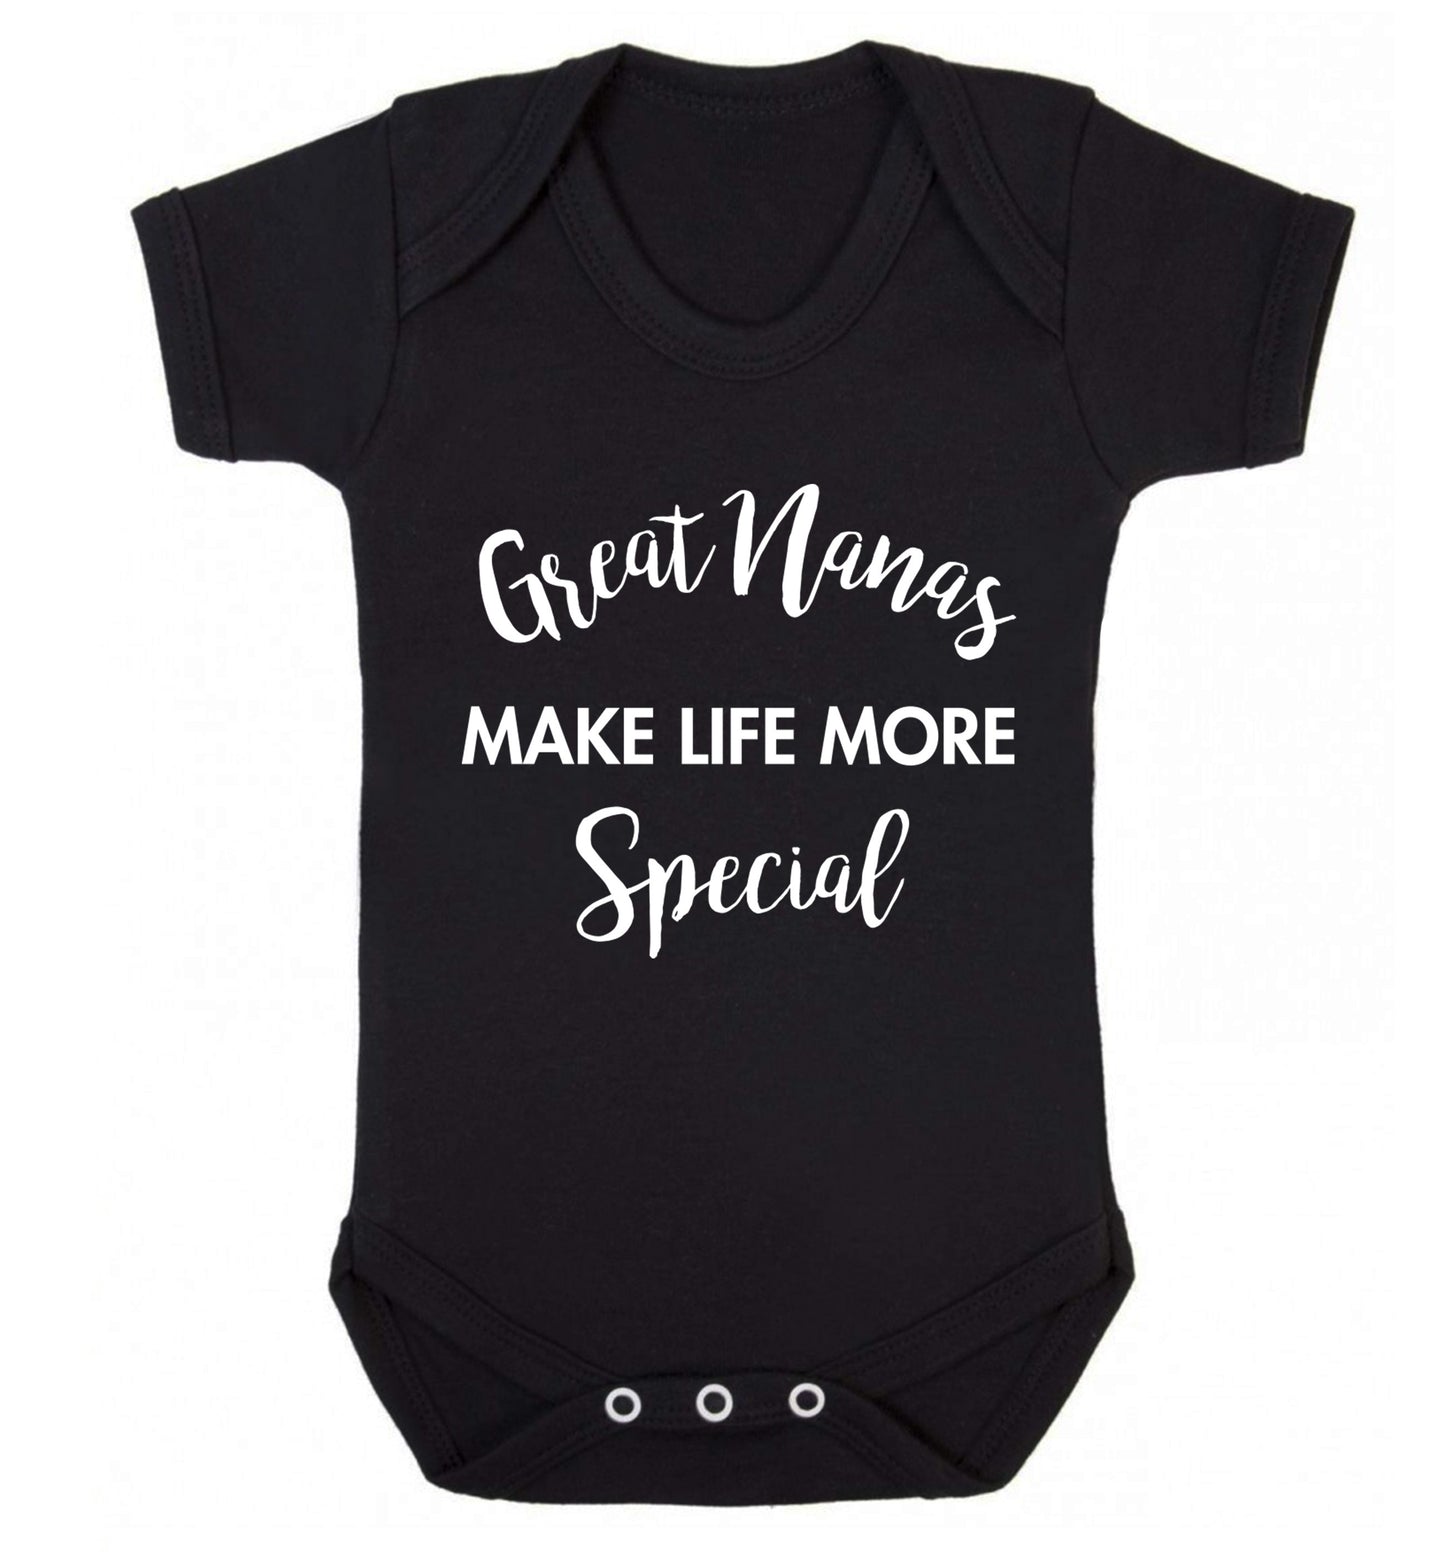 Great nanas make life more special Baby Vest black 18-24 months